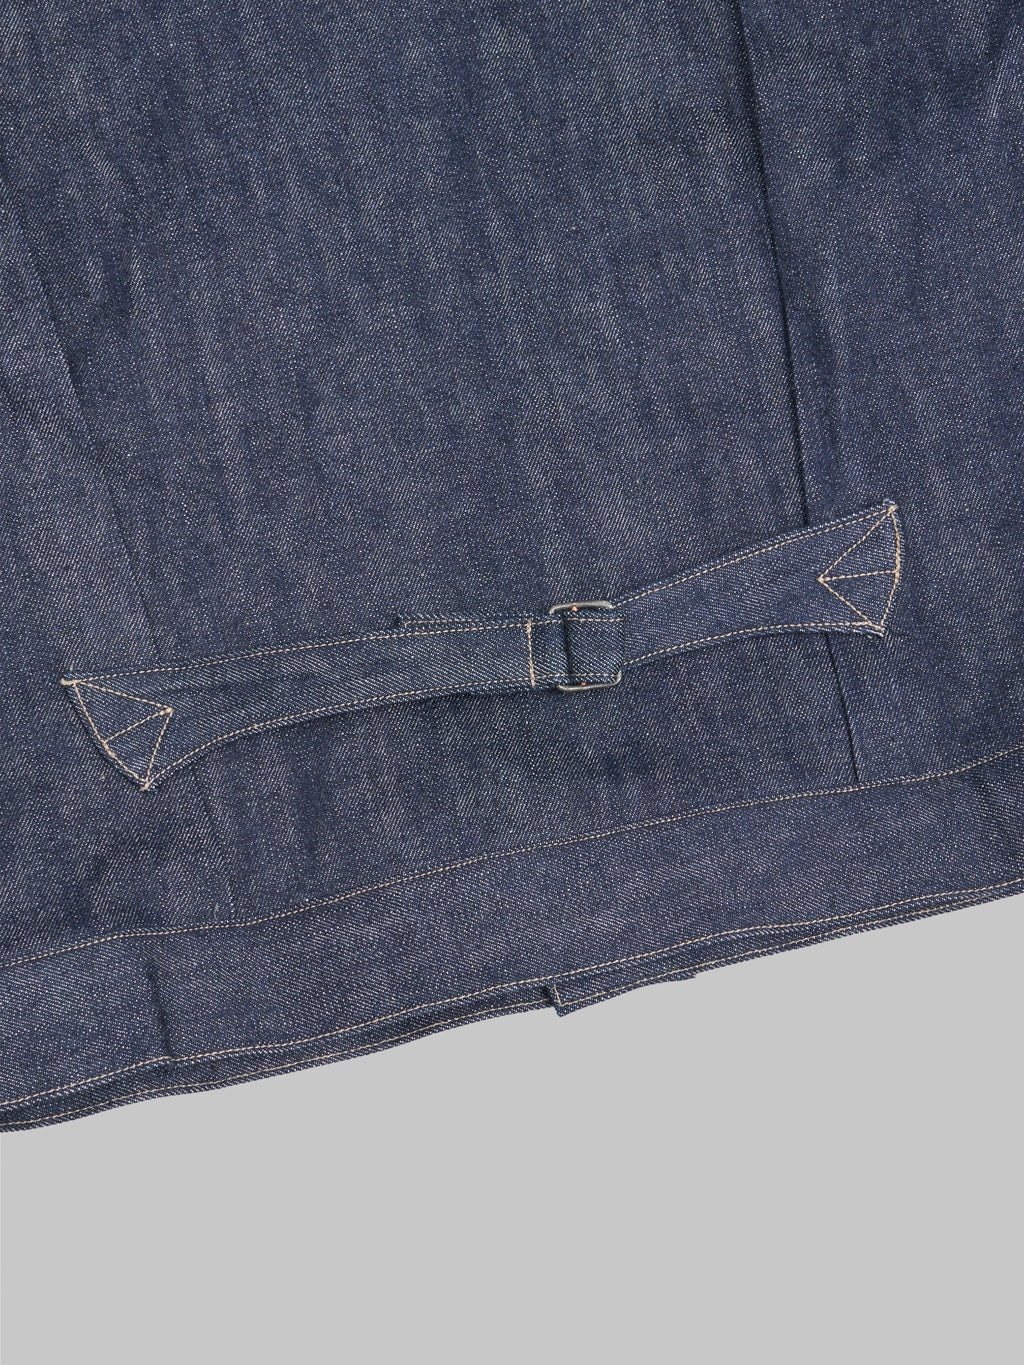 freenote cloth rj 313 ounce indigo selvedge denim jacket  cinch adjuster